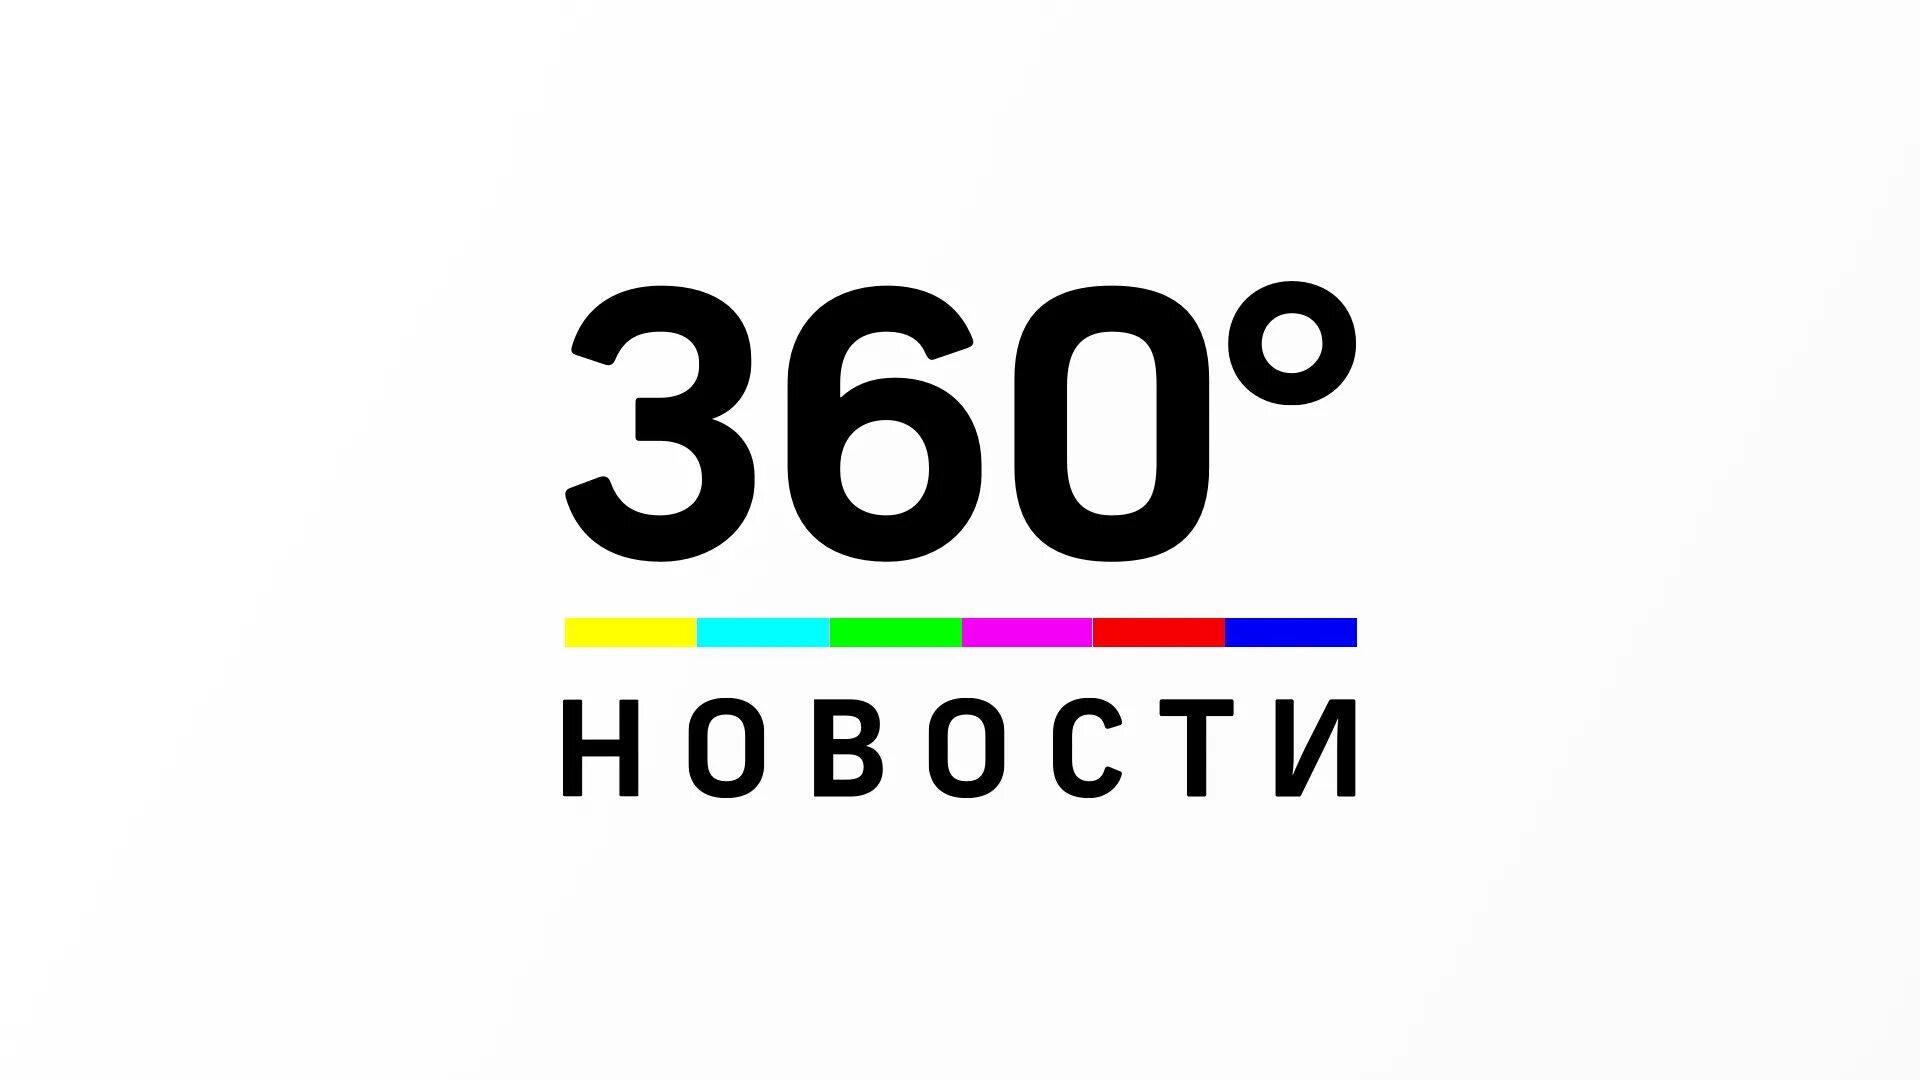 Телеканал 360 логотип. 360 Новости логотип. Телеканал 360 новости. 360 Градусов канал.